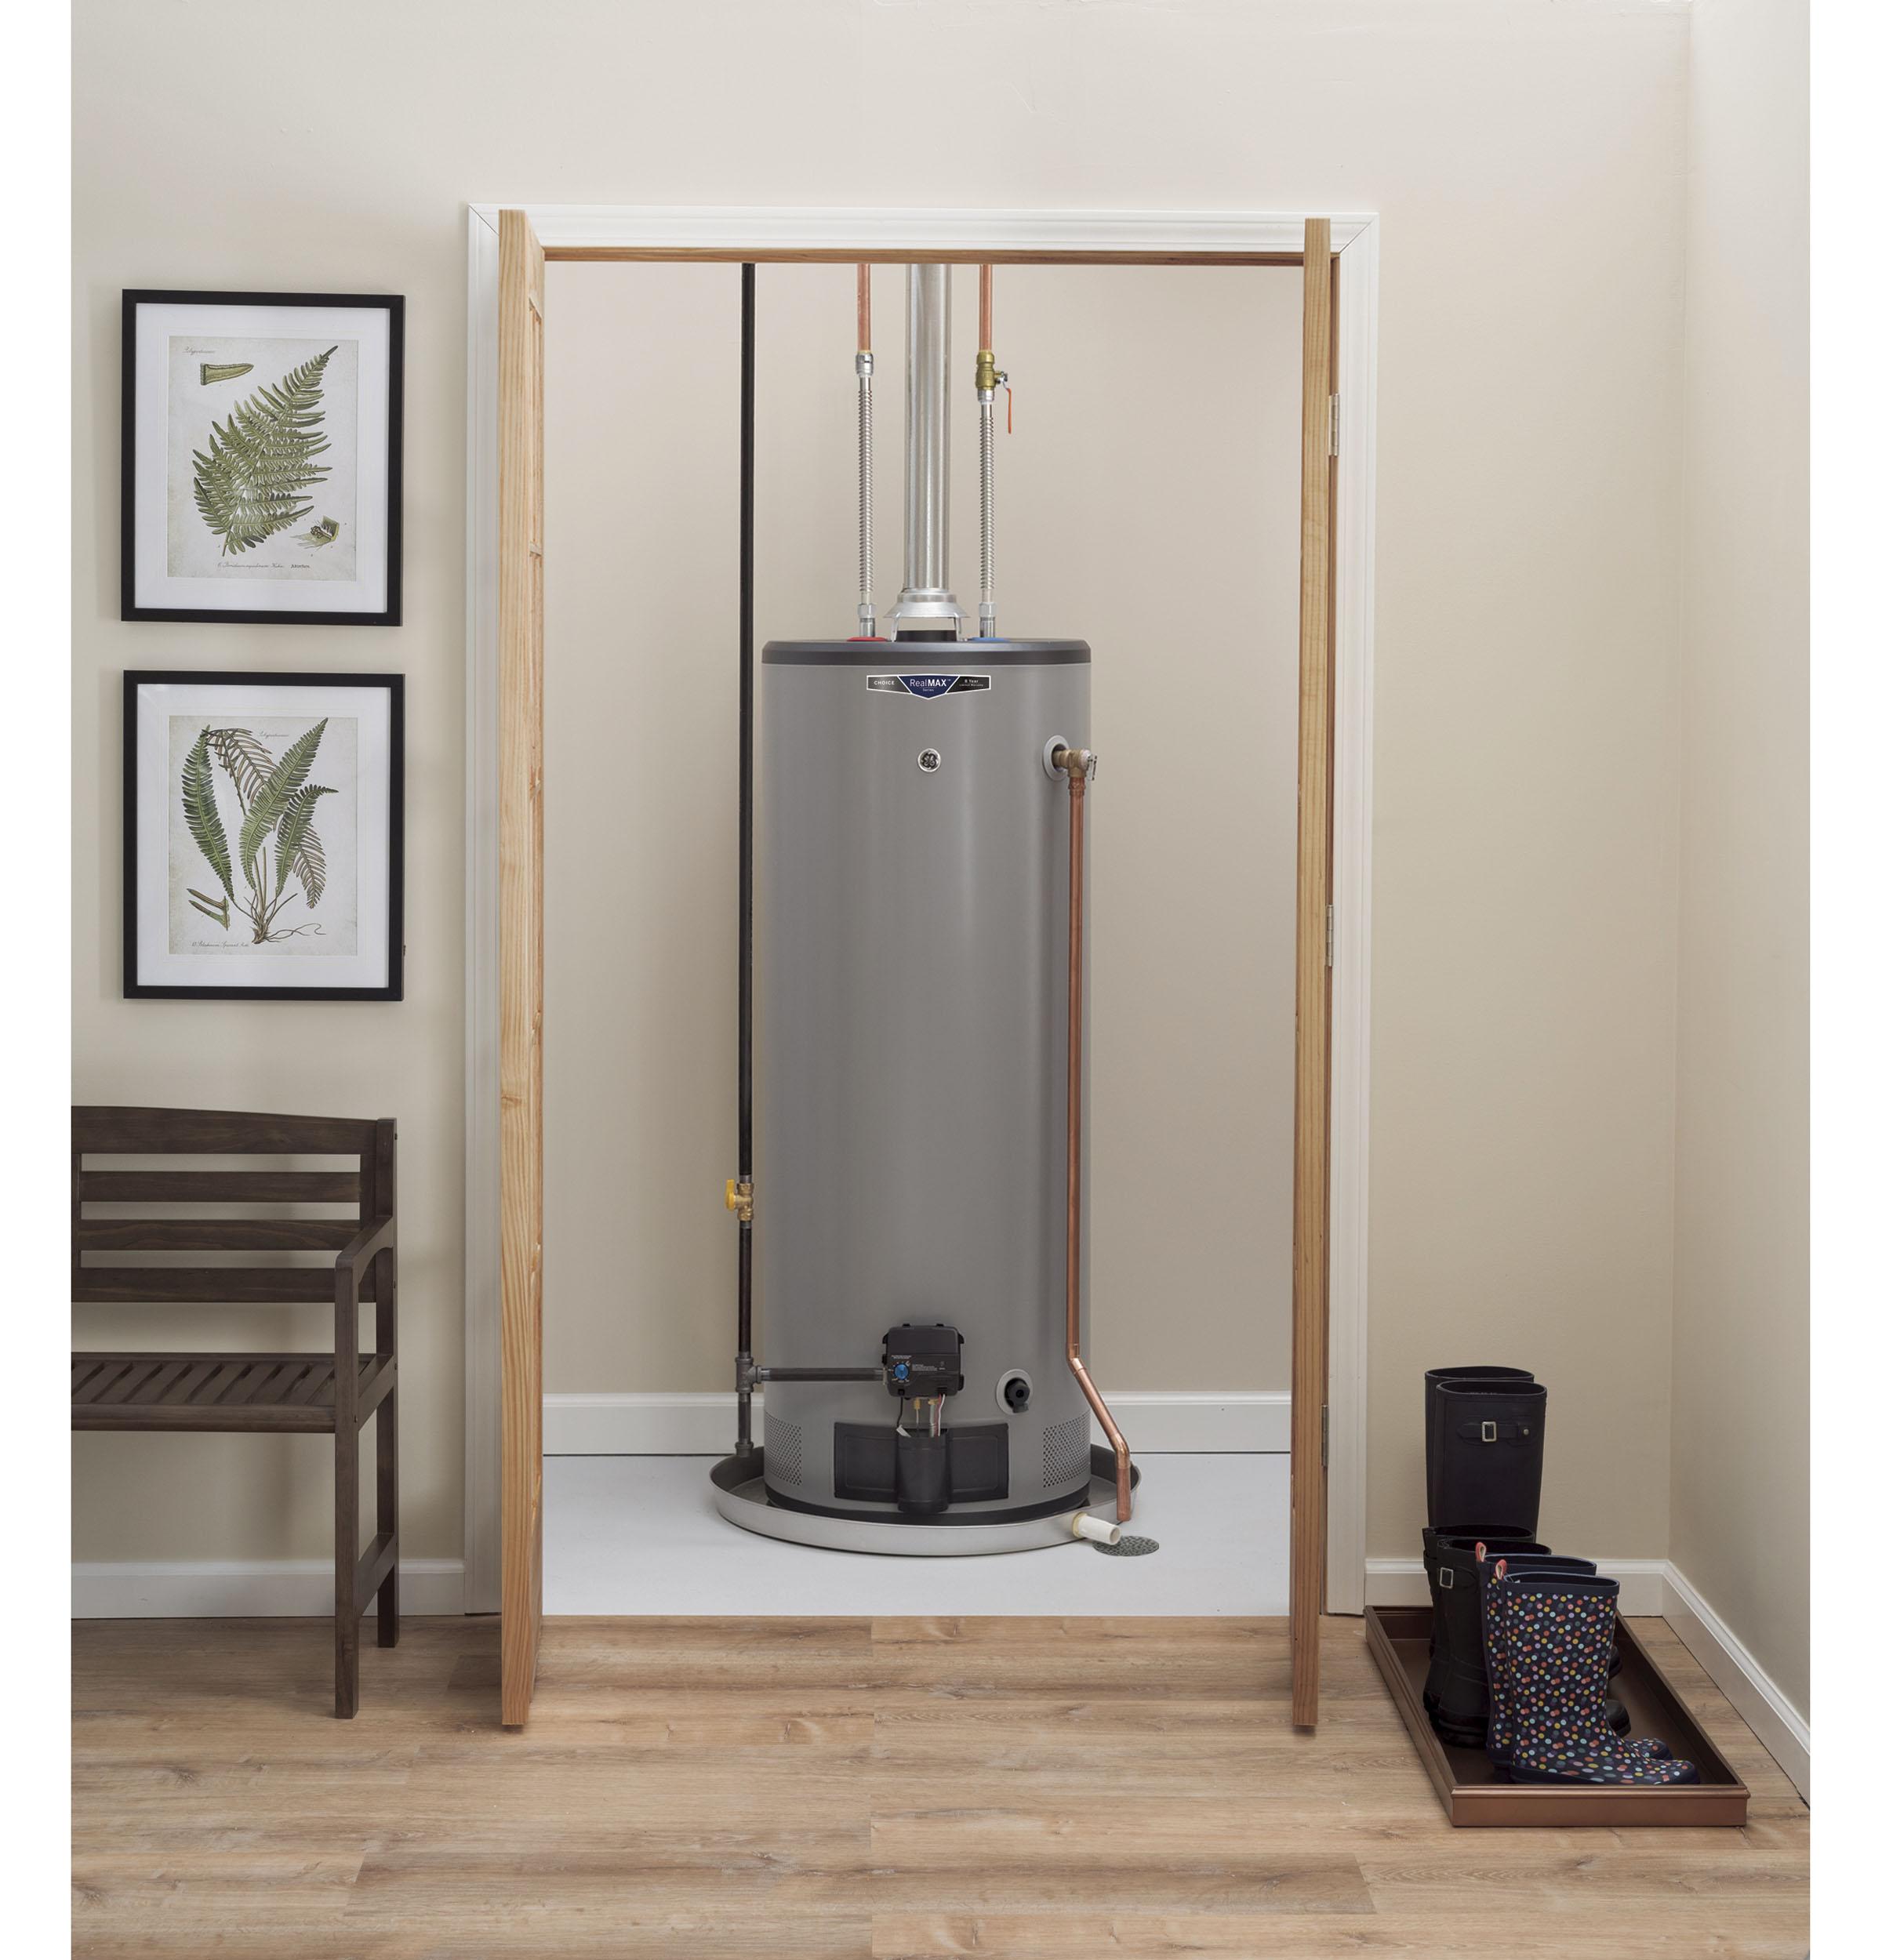 GE RealMAX Choice 50-Gallon Tall Liquid Propane Atmospheric Water Heater